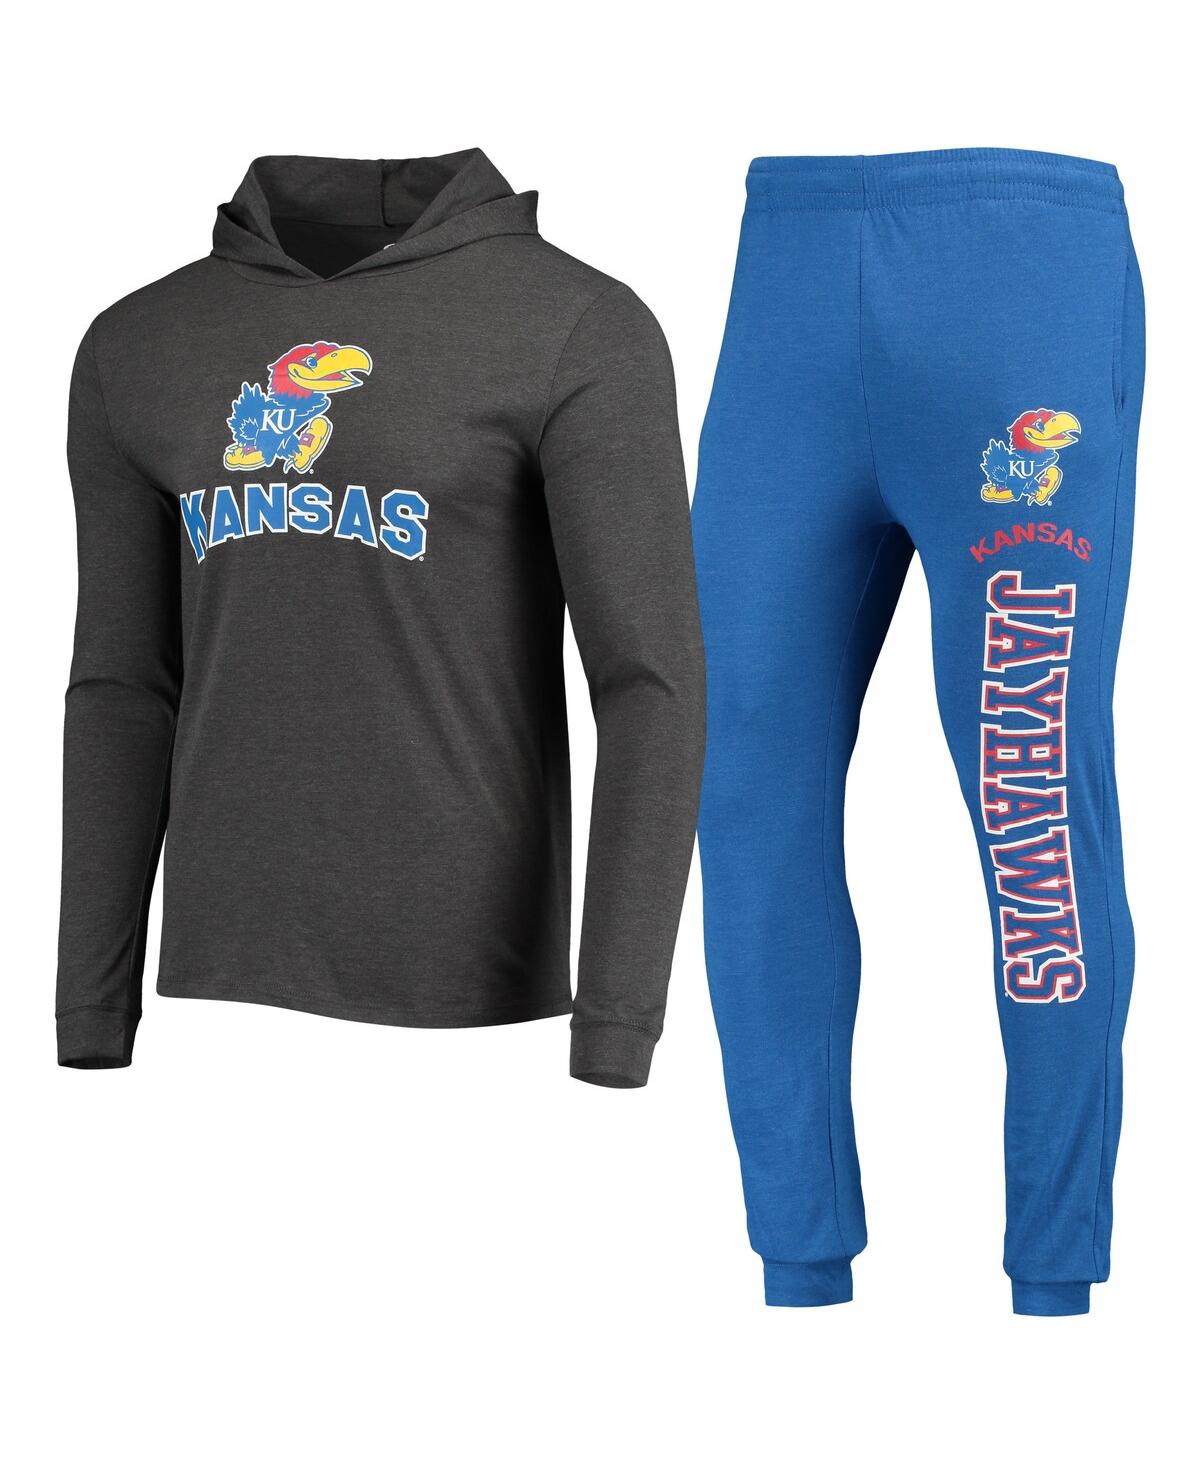 Men's Concepts Sport Royal, Heather Charcoal Kansas Jayhawks Meter Long Sleeve Hoodie T-shirt and Jogger Pajama Set - Royal, Heather Charcoal